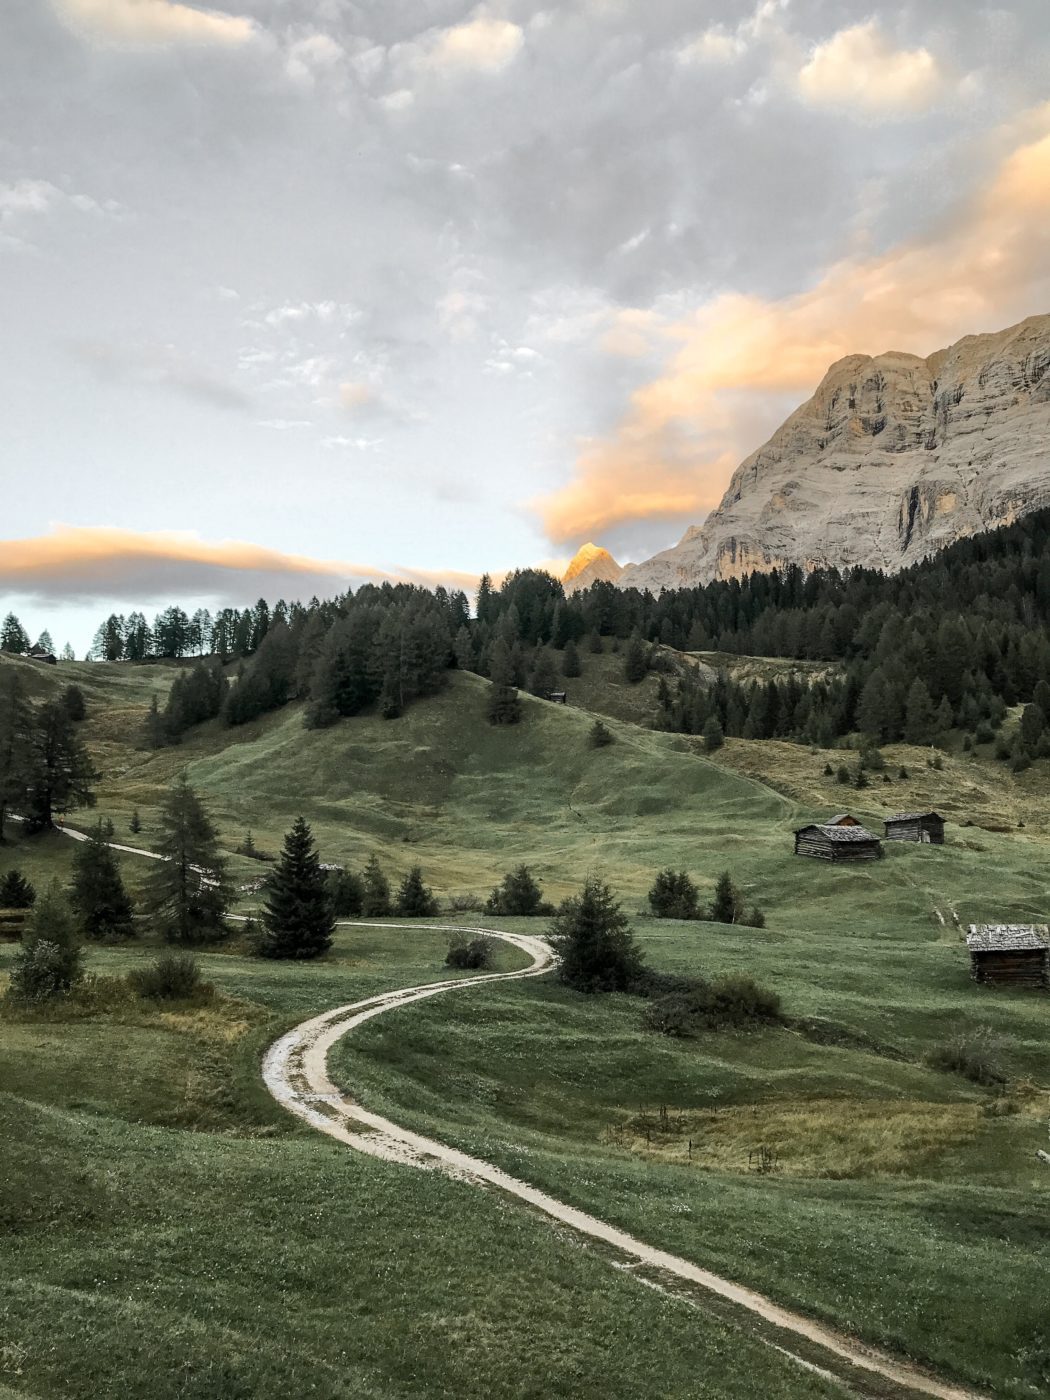 Armentara, famous Instagram location in South Tyrol